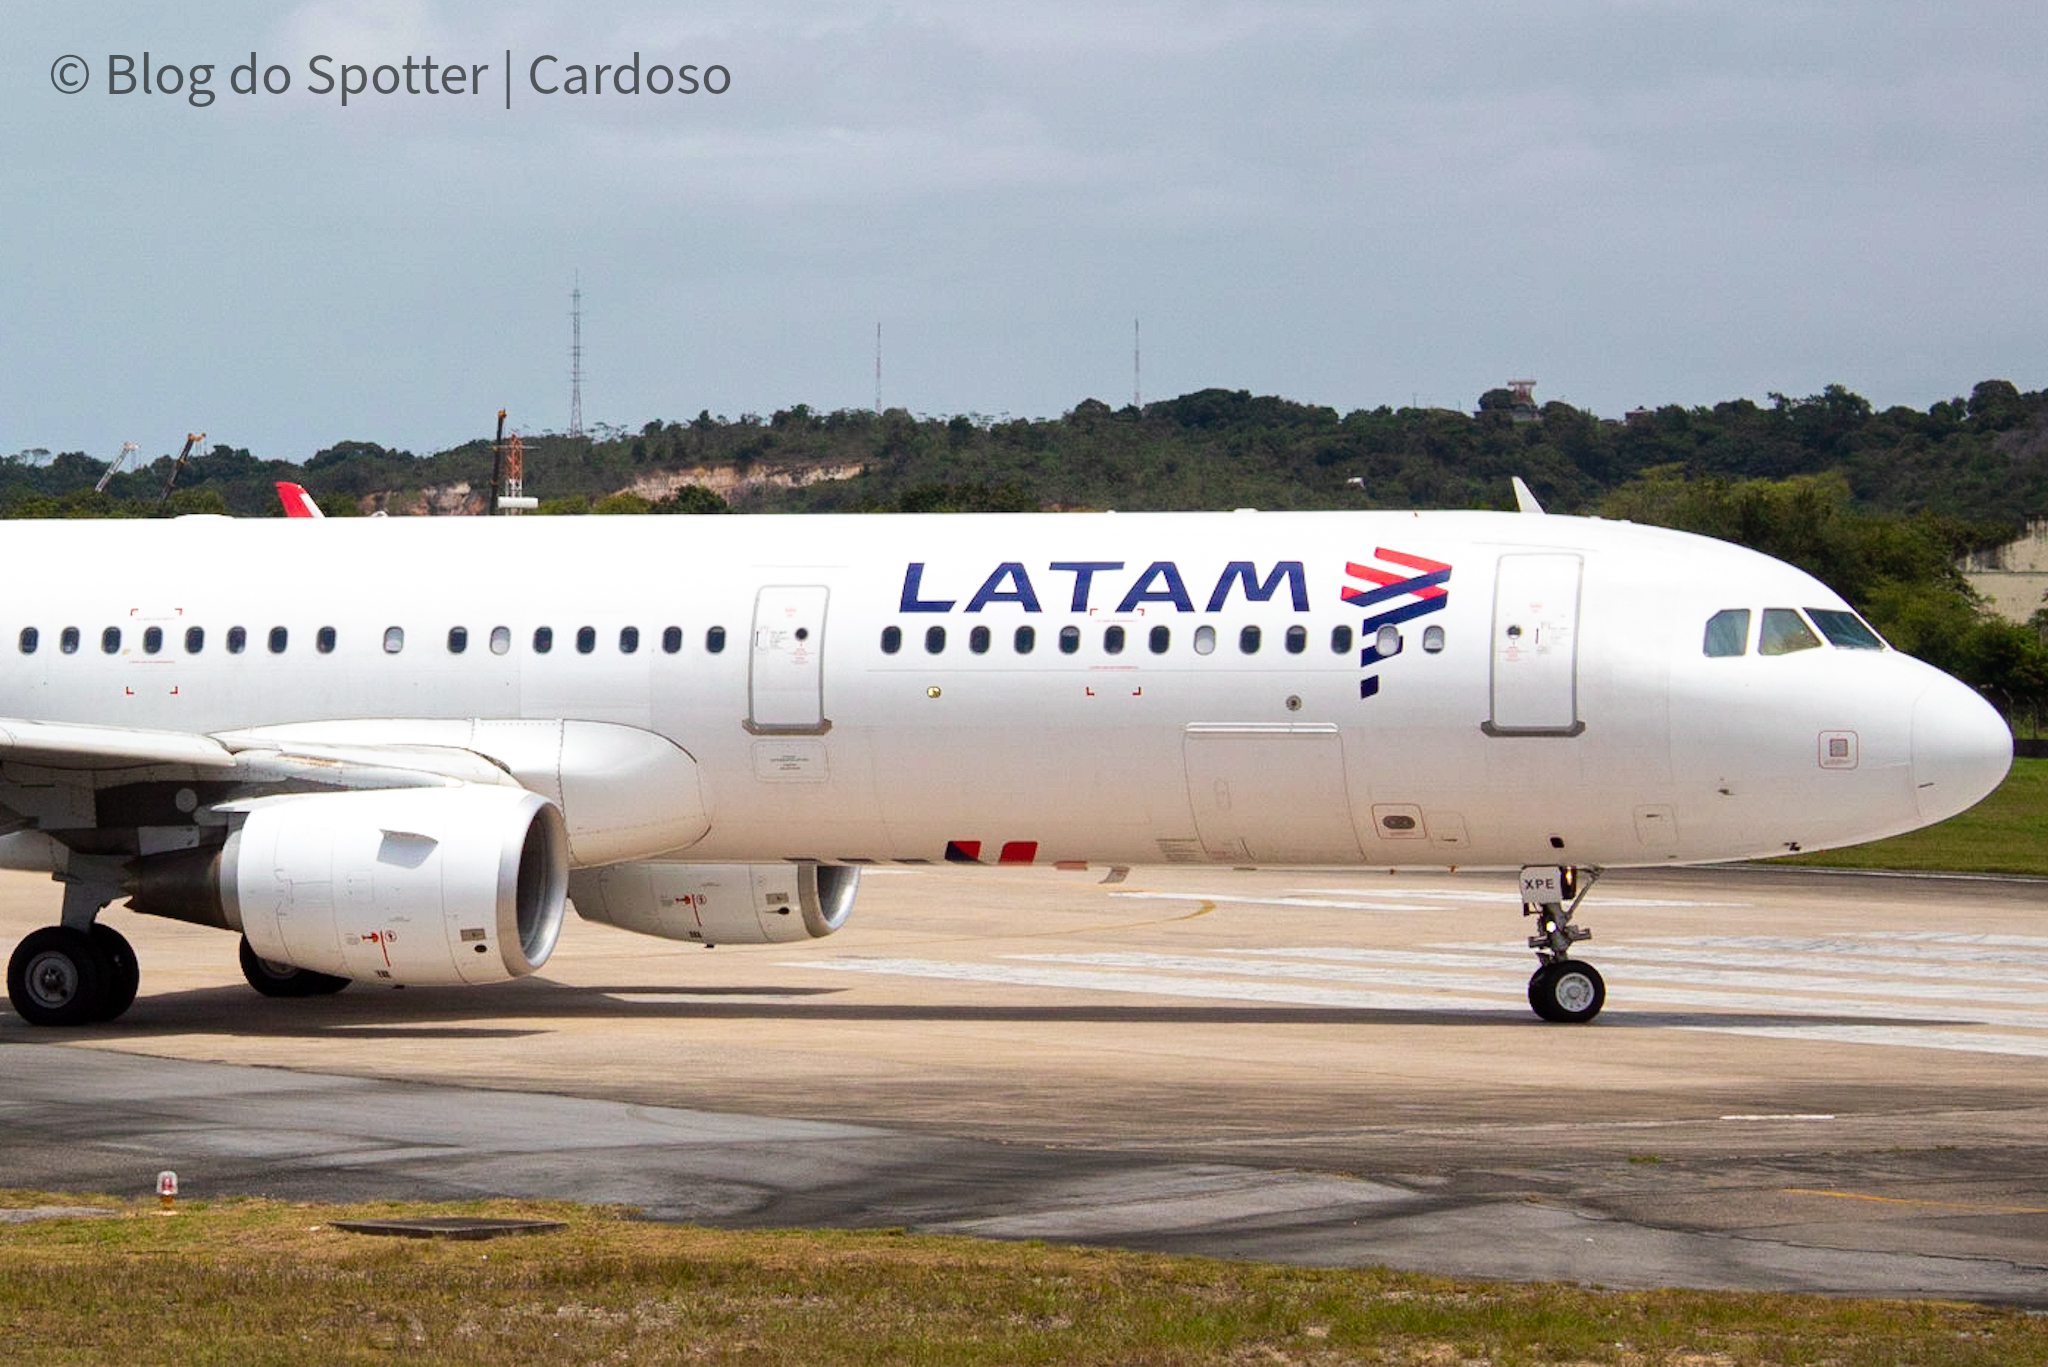 PT-XPE - Airbus A321-211 - LATAM Airlines